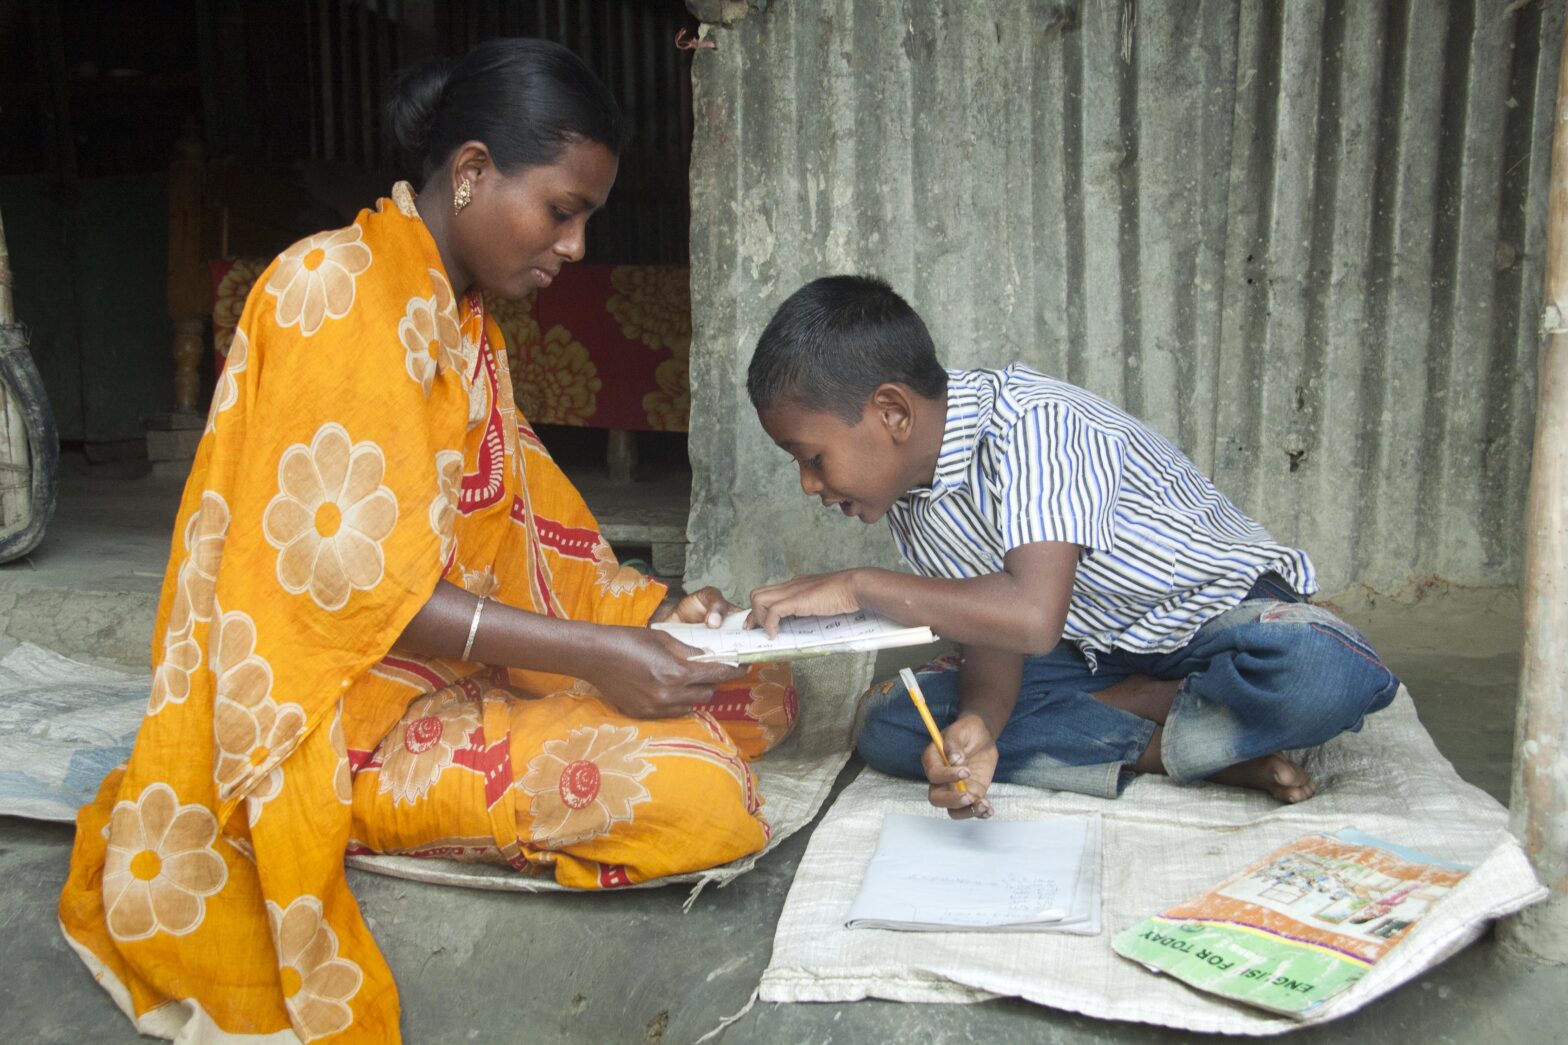 bangladesh-blazes-trails-on-measuring-women’s-unpaid-work